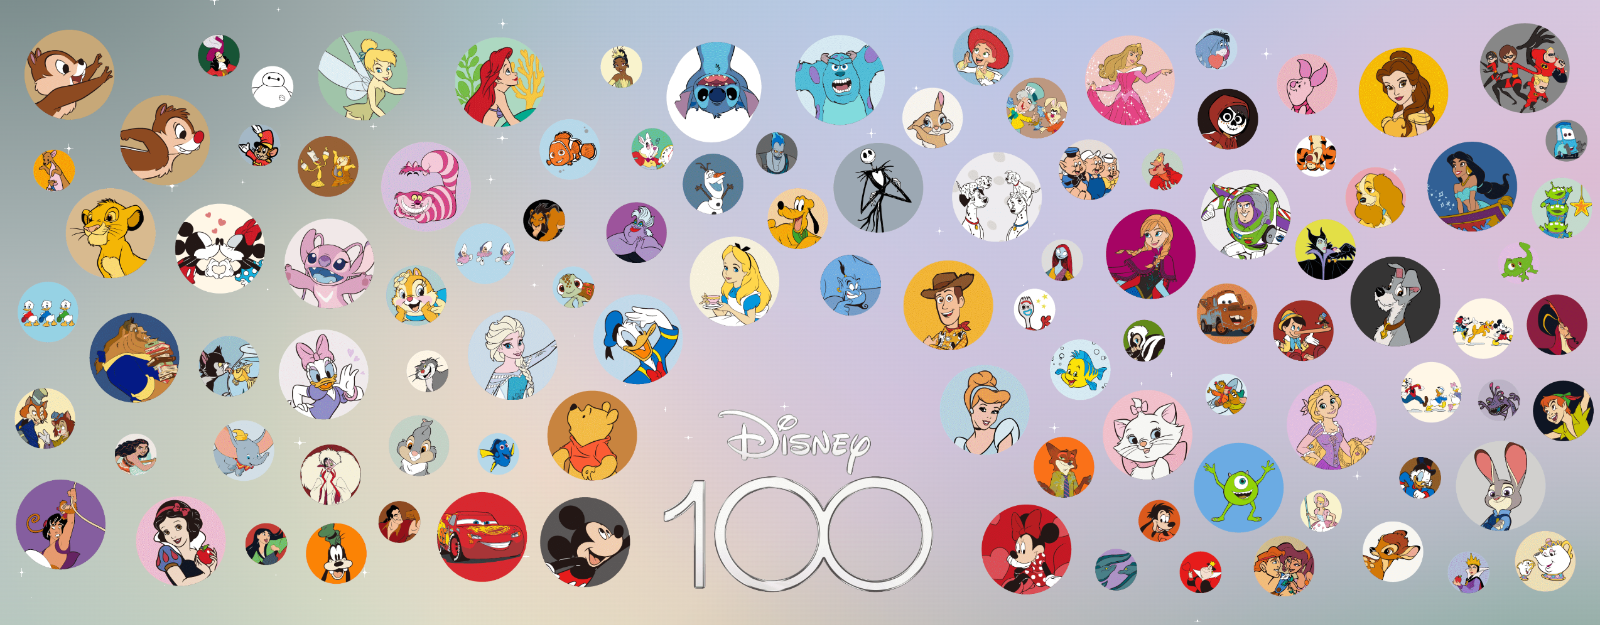 Disney 100 Year of Wonder x Samantha thavasa 100 Kinds Hand Bag Ursula Villains